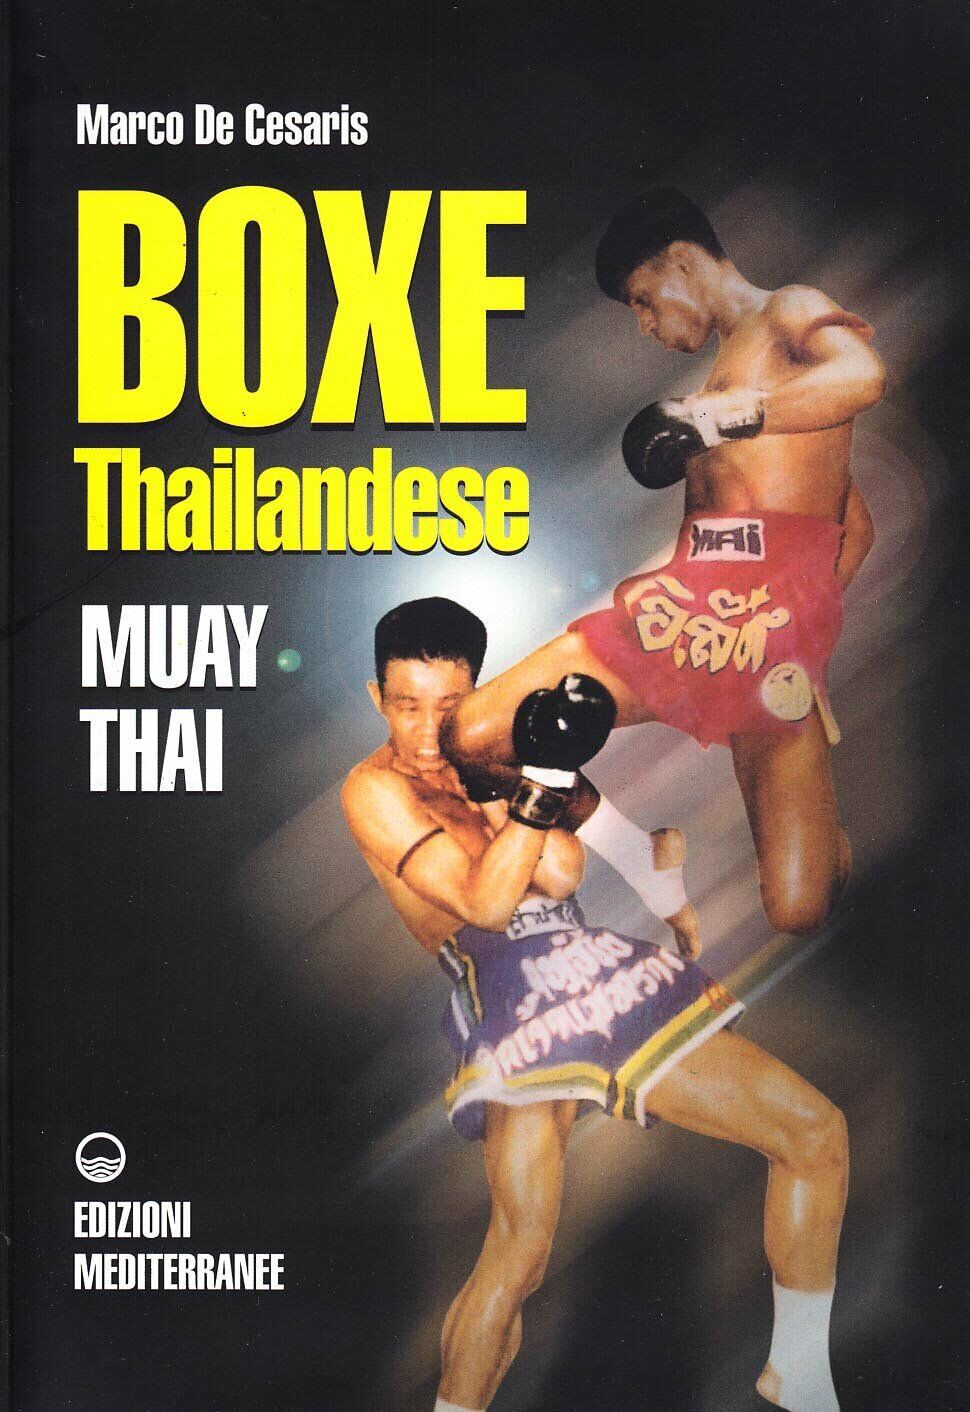 Boxe thailandese: muay thai - Marco De Cesaris - Edizioni Mediterranee, 1995